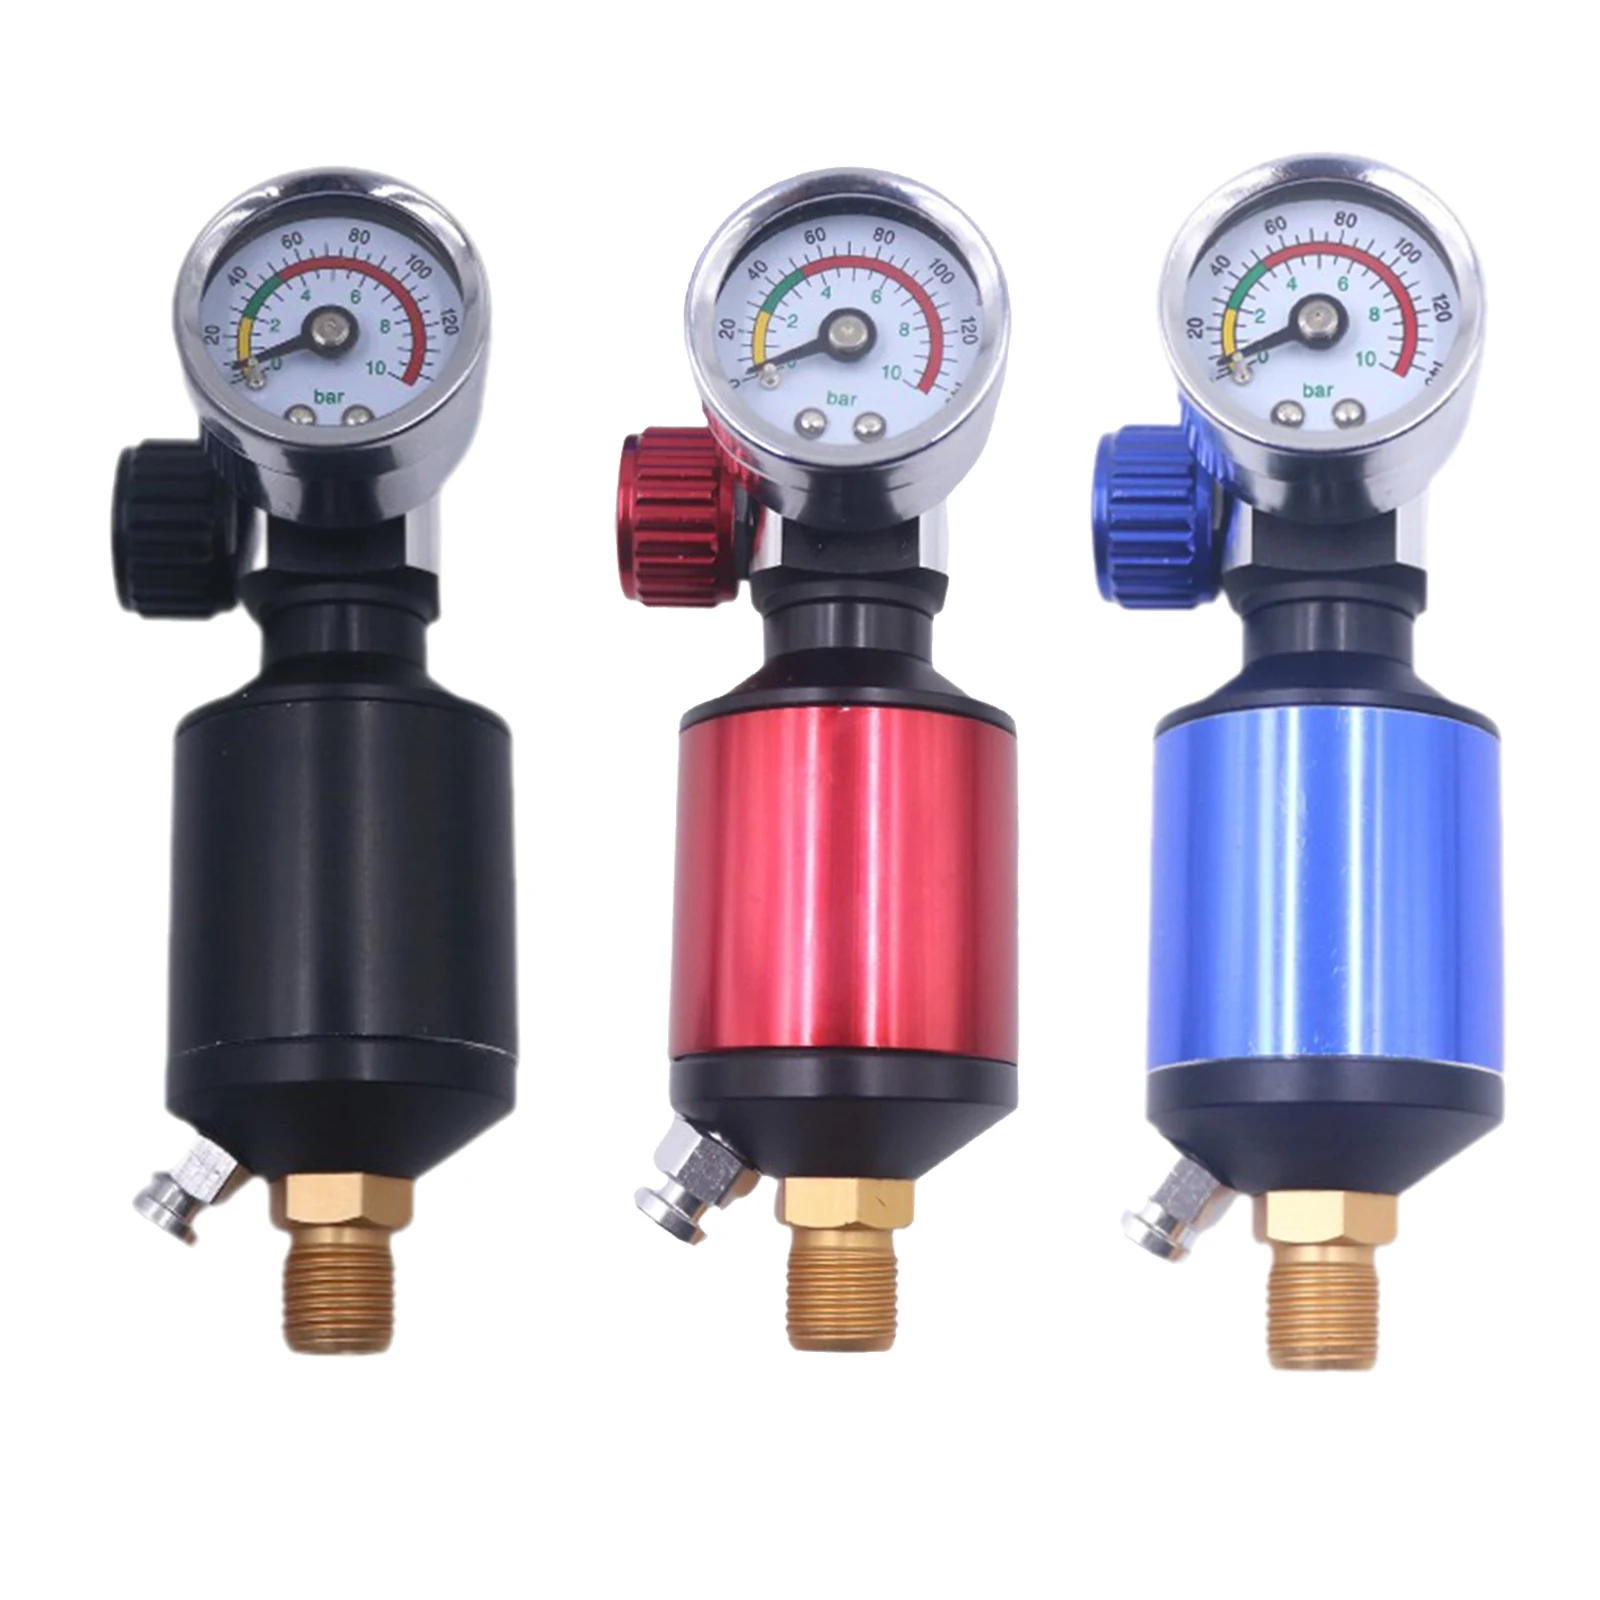 1/4 Inch Air Regulator Compressor Moisture Adjustable Water Oil Separator with Pressure Gauge for Air Tools Spray Gun